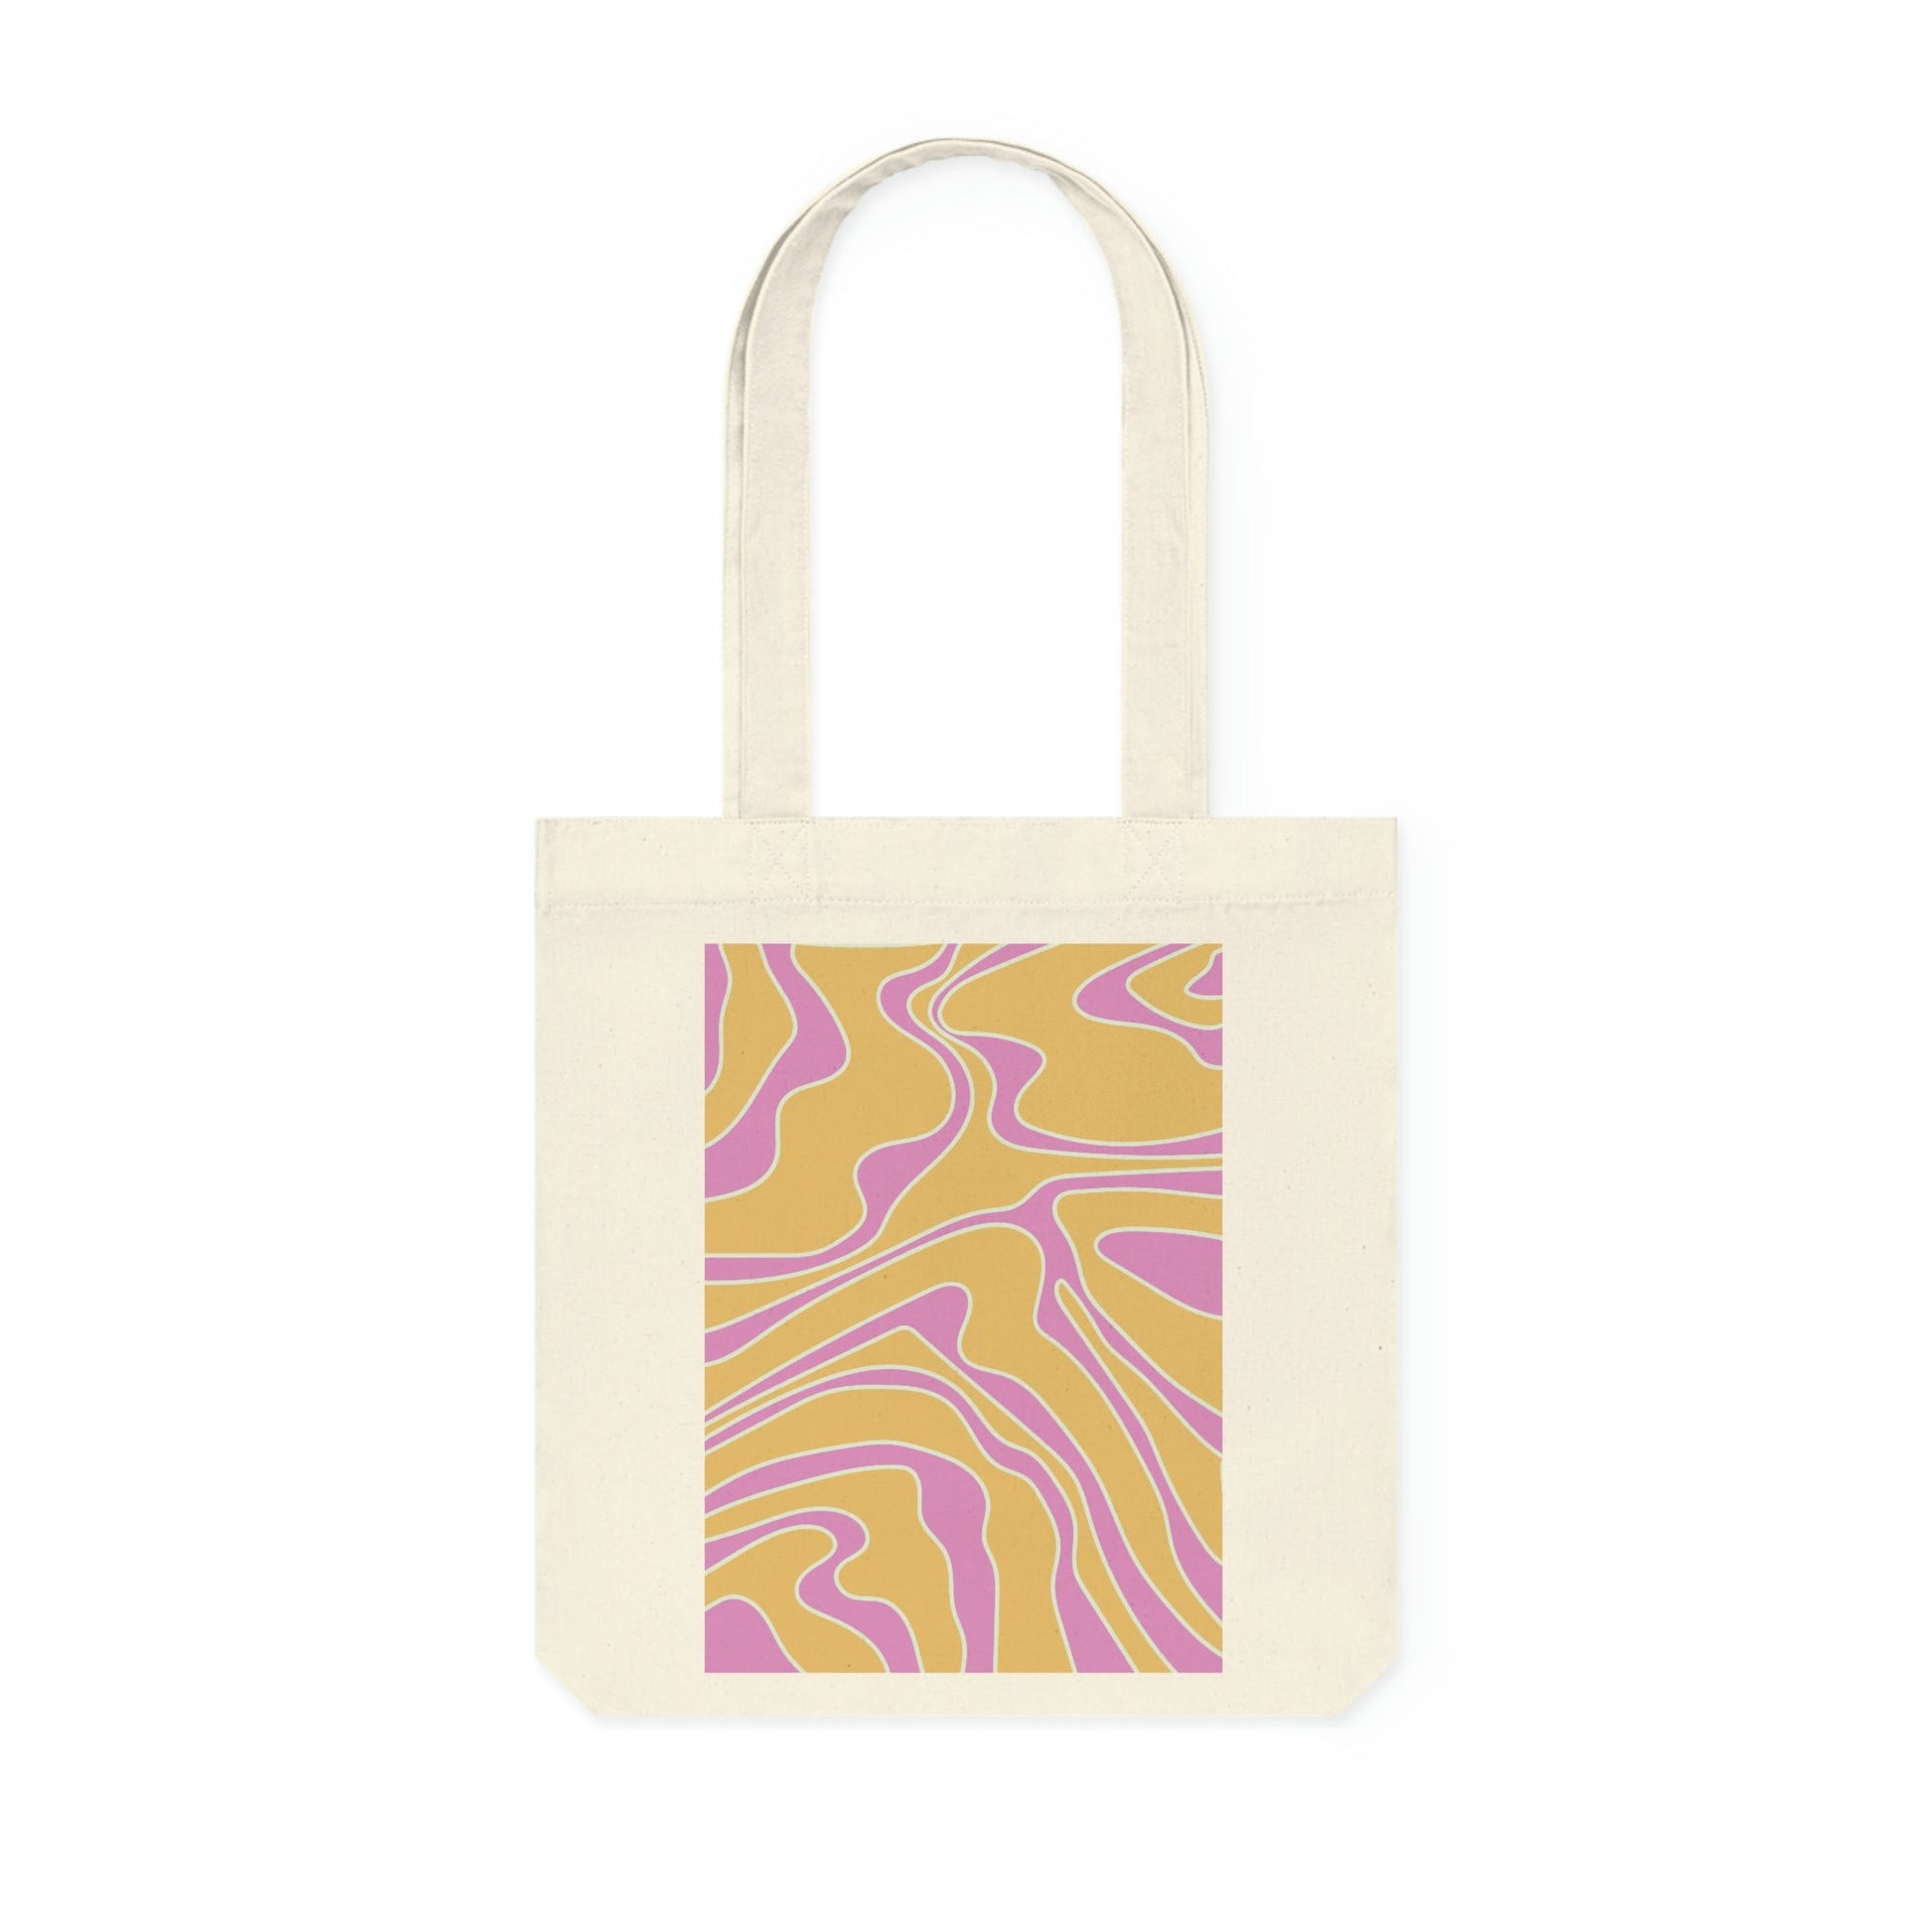 Little by Little - by Little Lady Funky tote bag 'Swirls' - yellow&pink